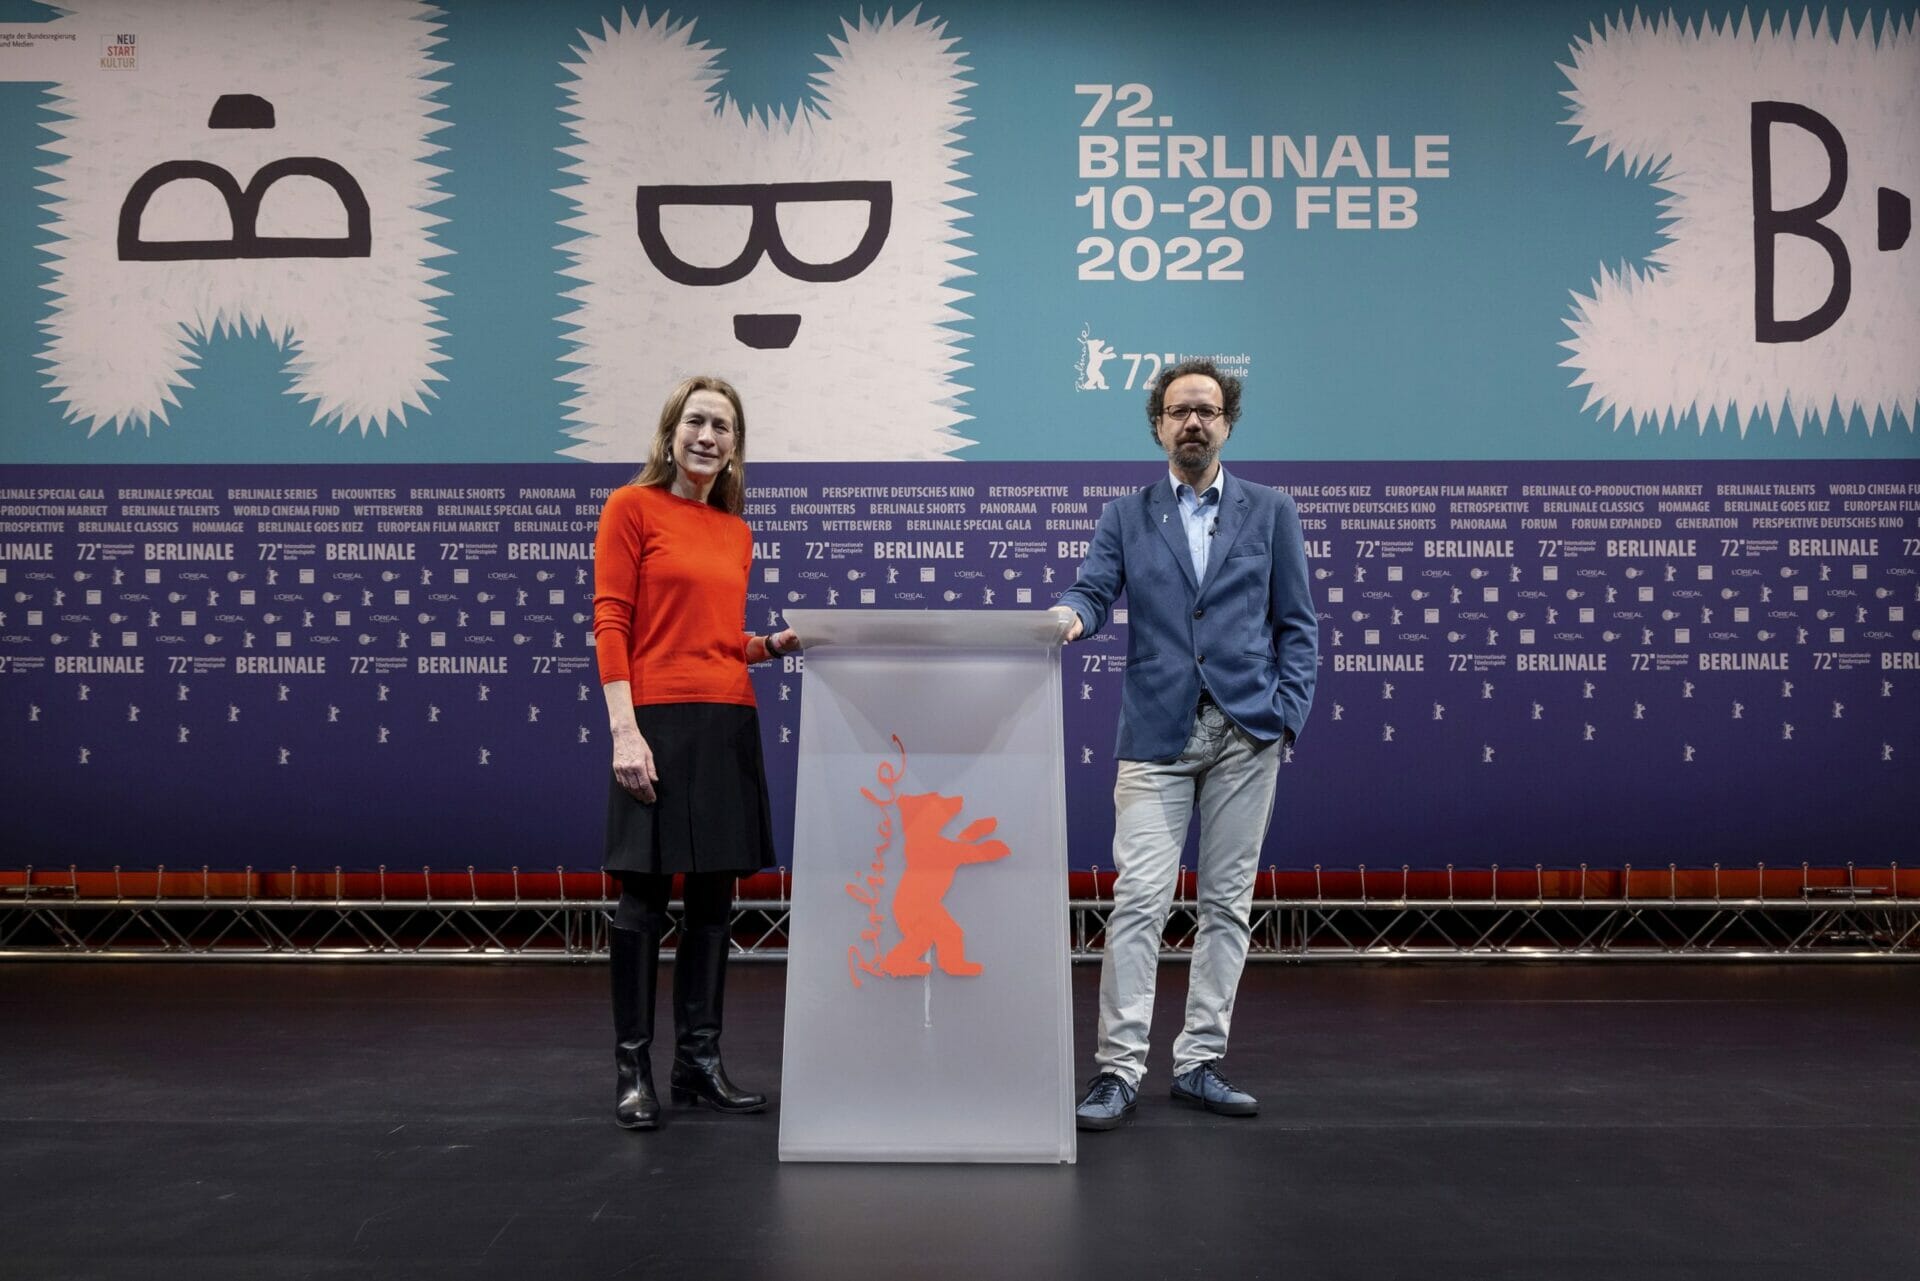 Image courtesy of Dirk Michael Deckbar / Berlinale 2022.